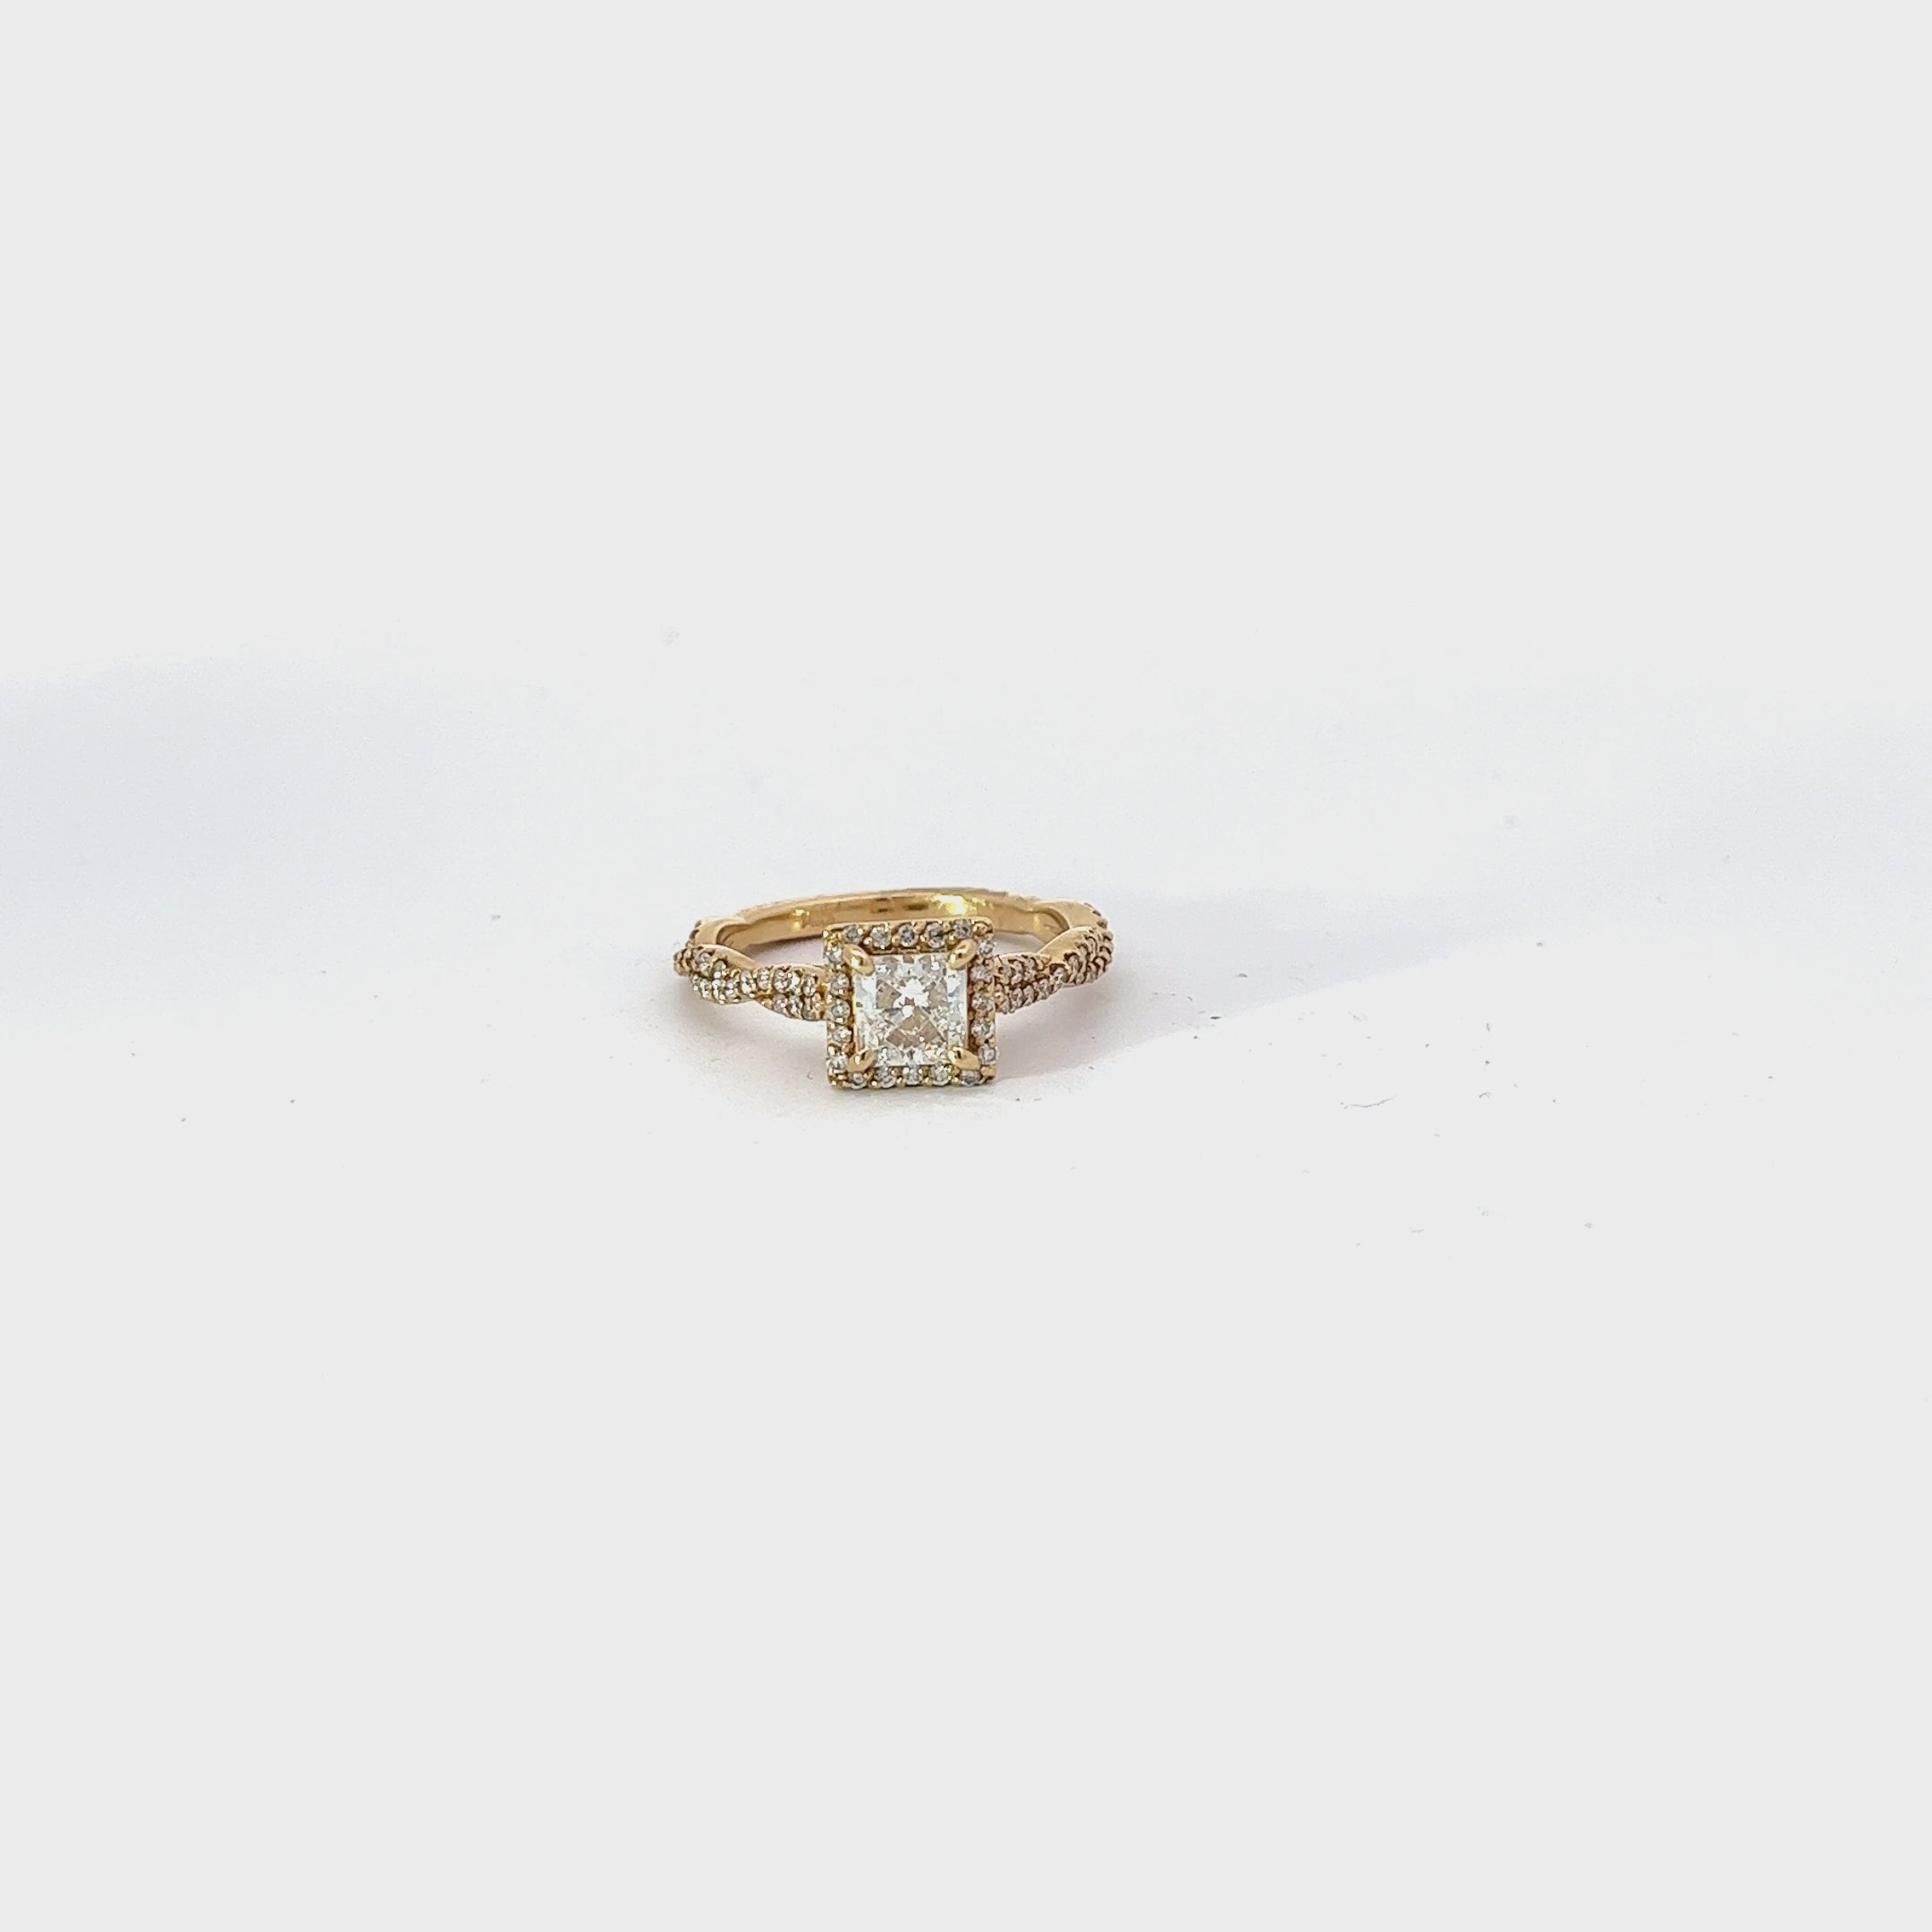 Ladies 14k yellow gold .70ct Princess Cut G VS2 AND .35ct G VS2 Round Diamond engagement ring